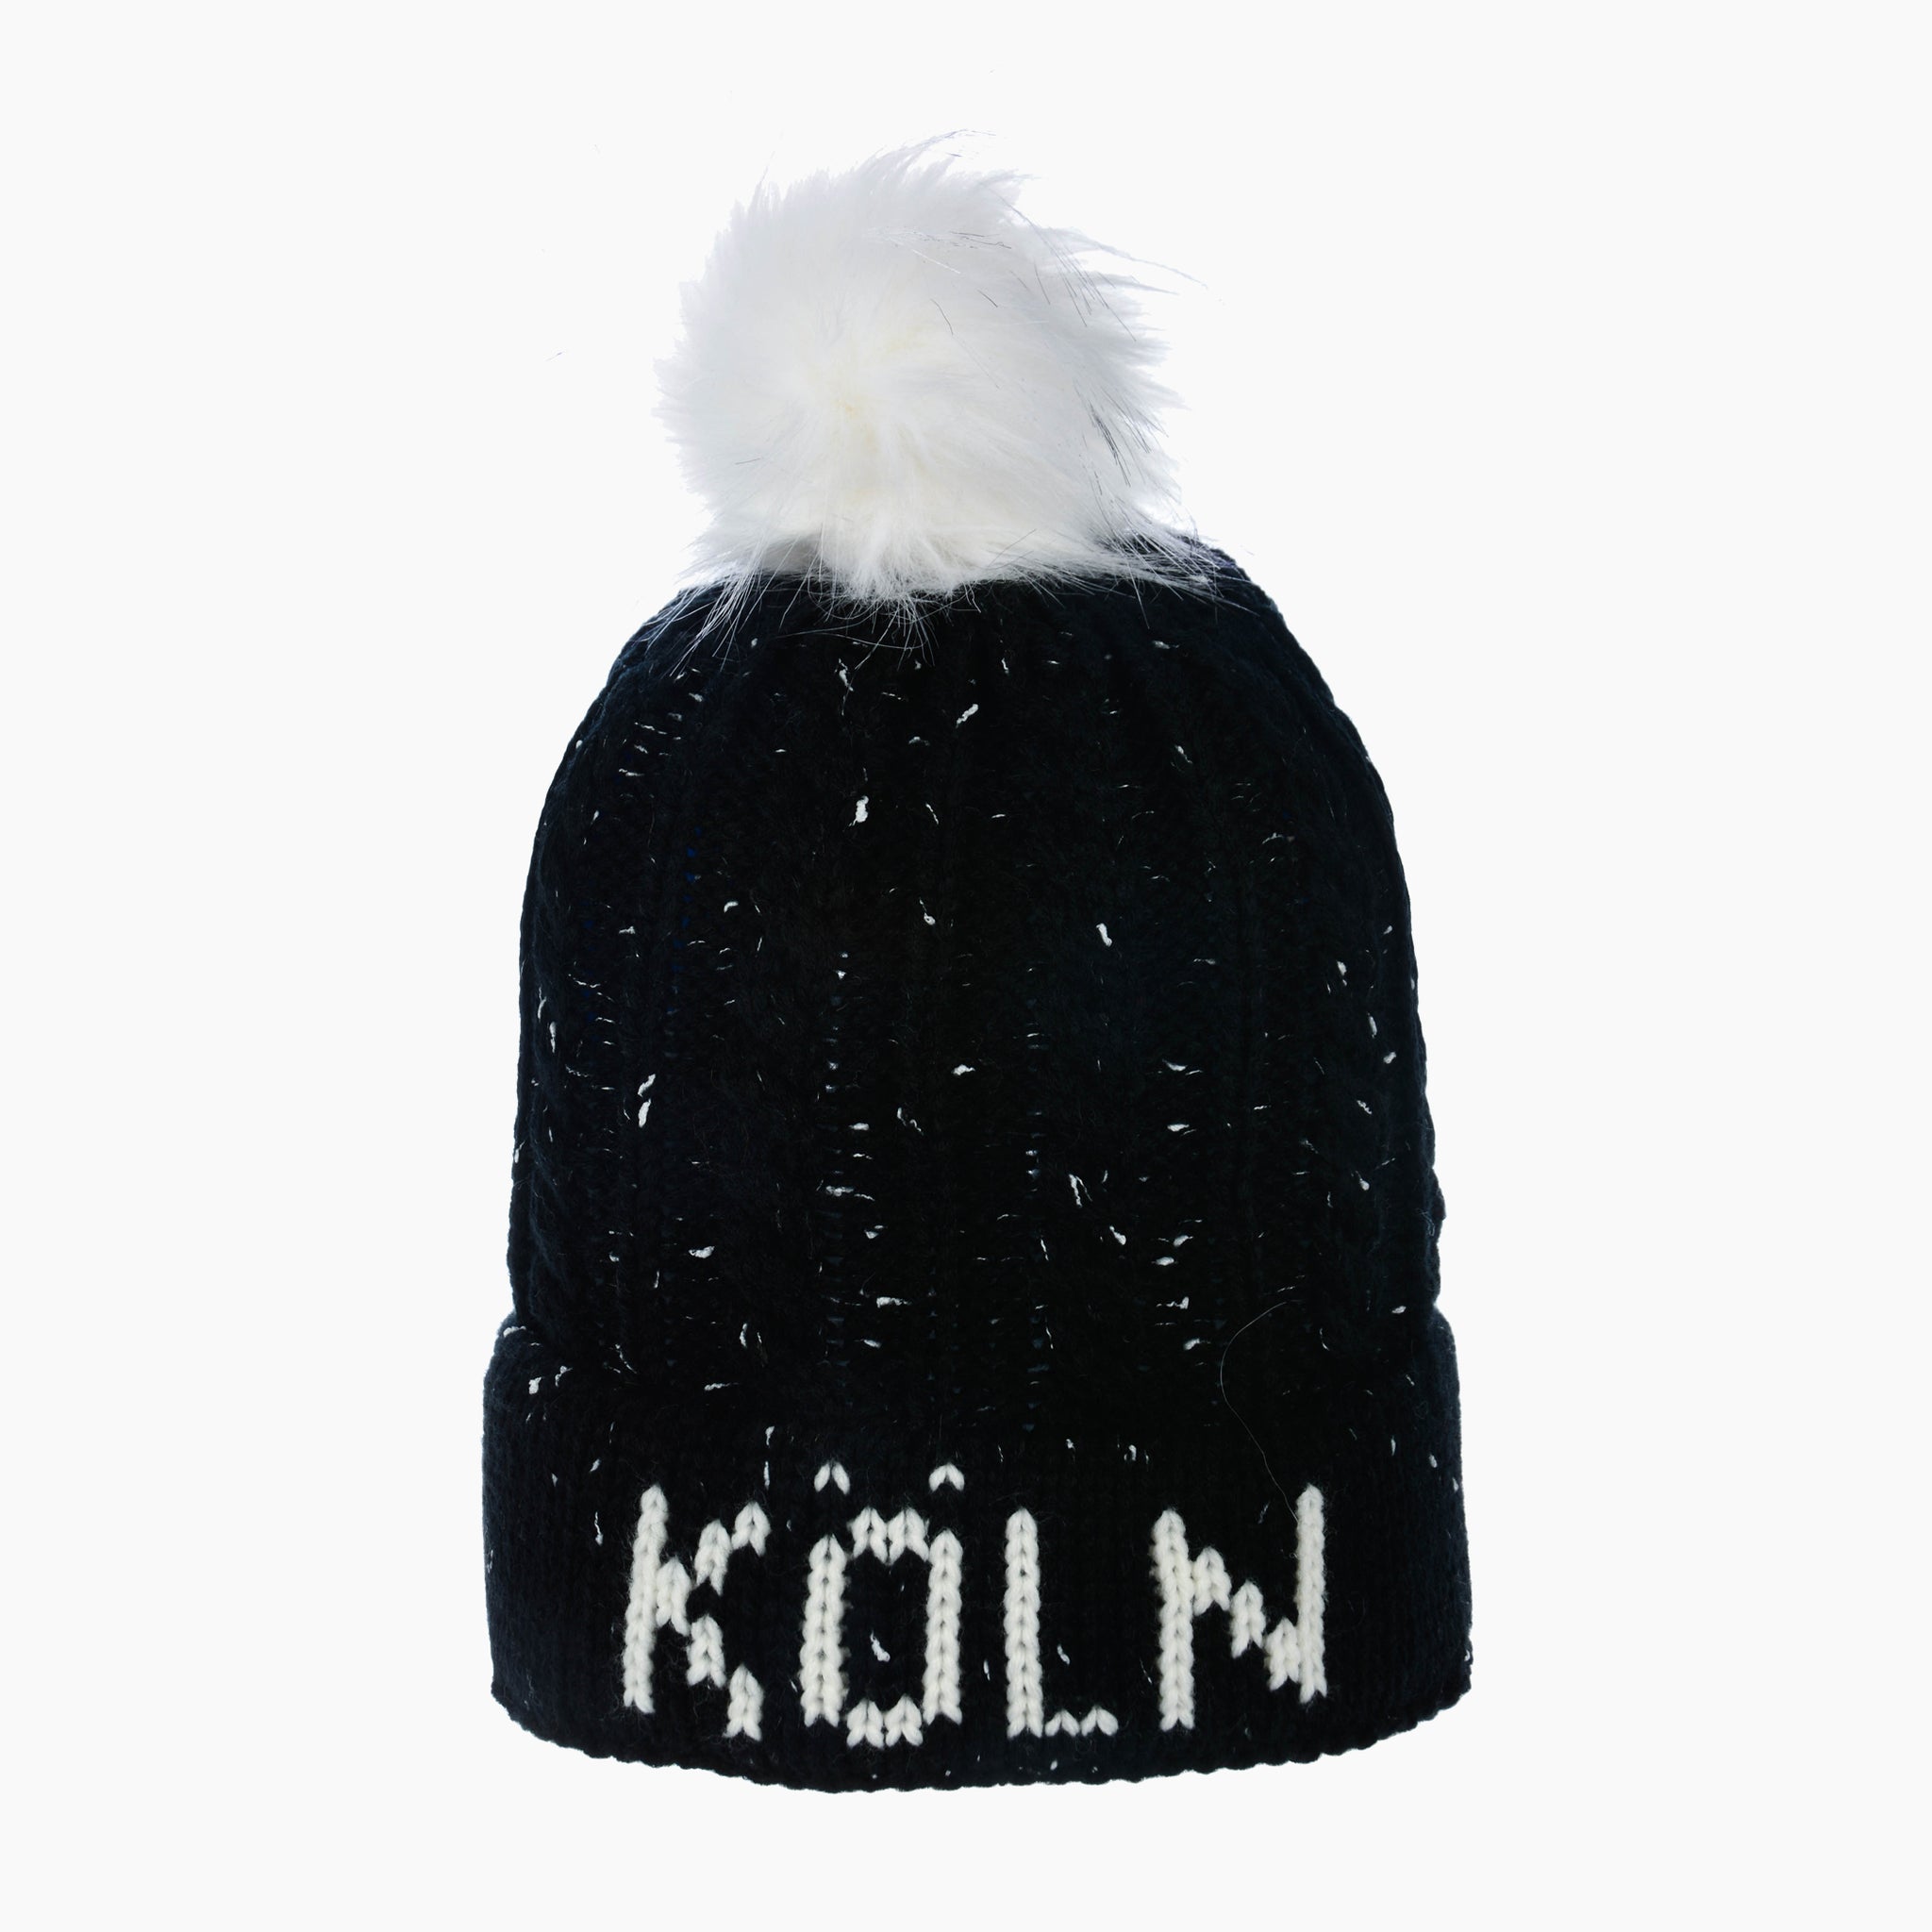 Köln Winter Hat with Pompon - Robin Ruth